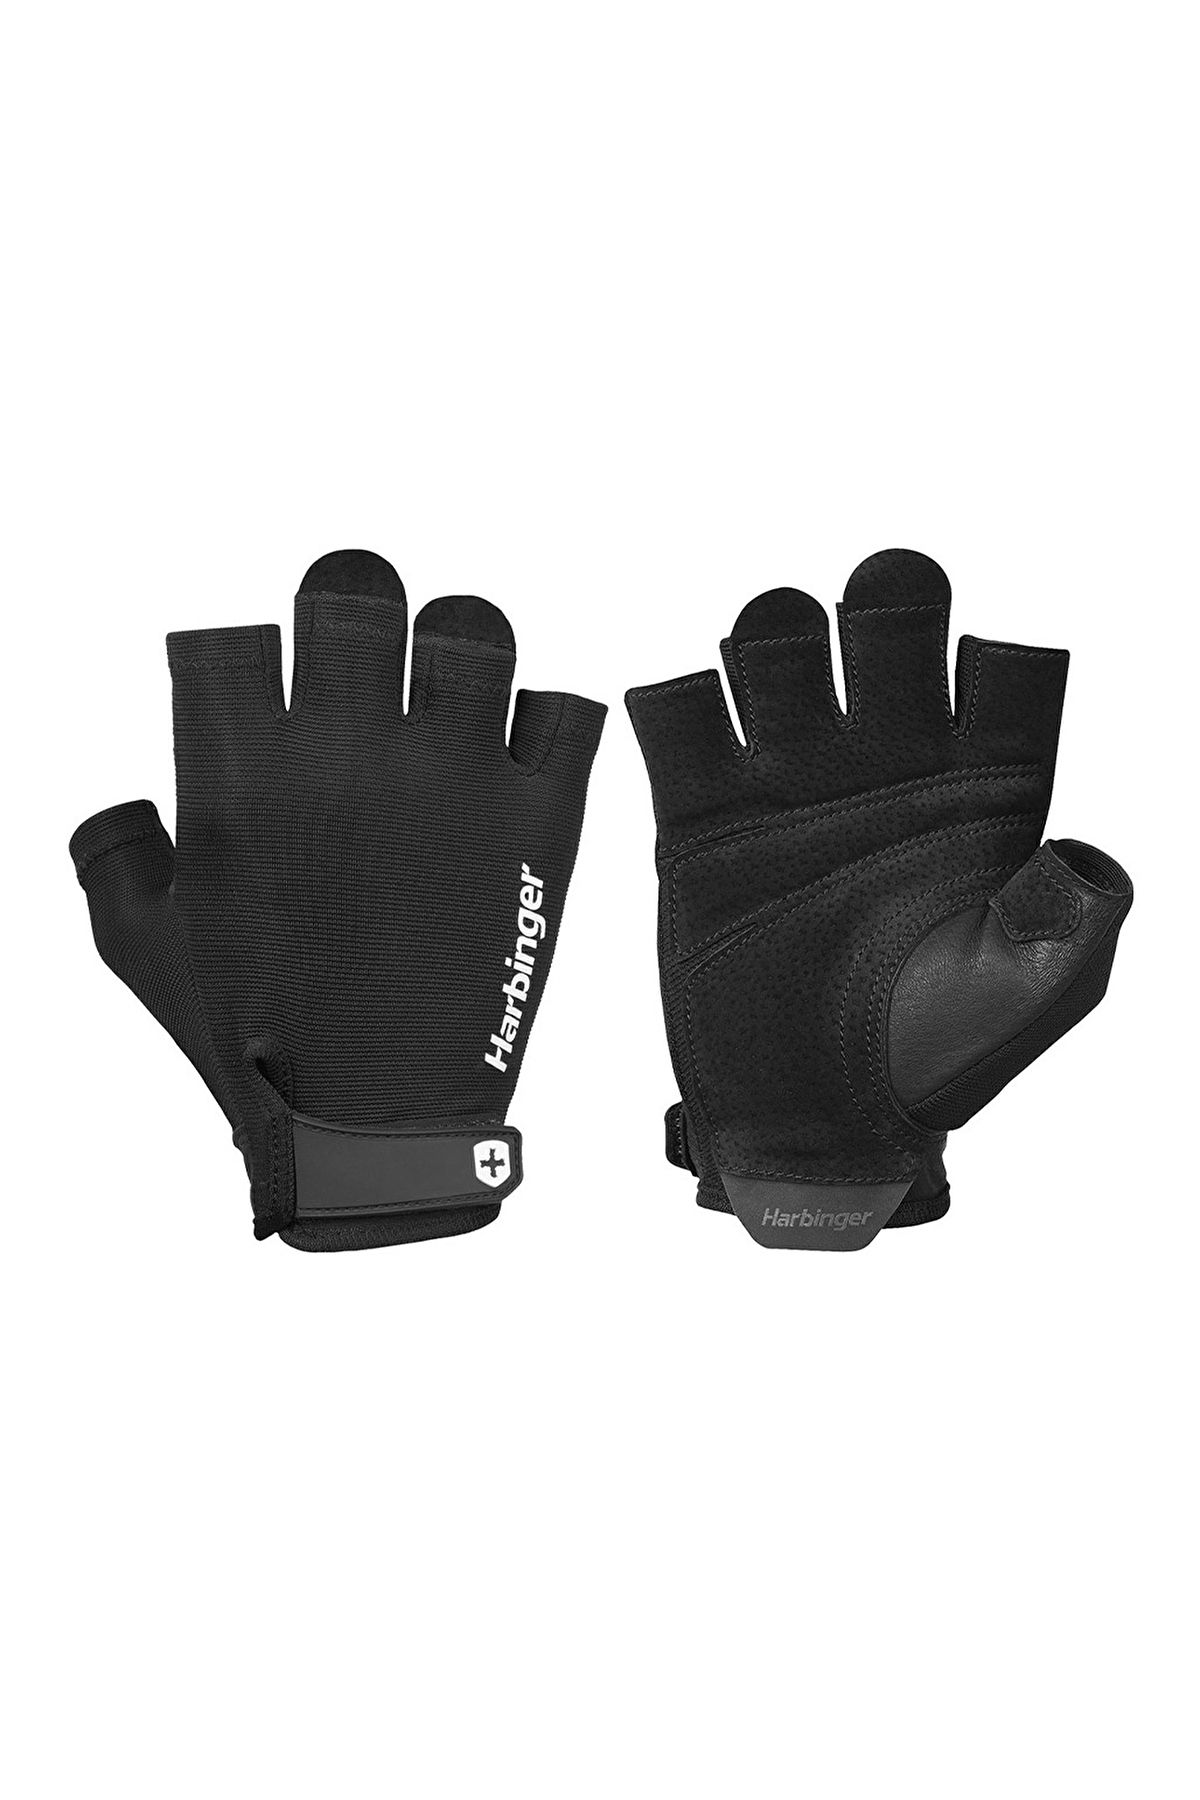 Harbinger Power Gloves - Xl Erkek Fitness Eldiveni Siyah